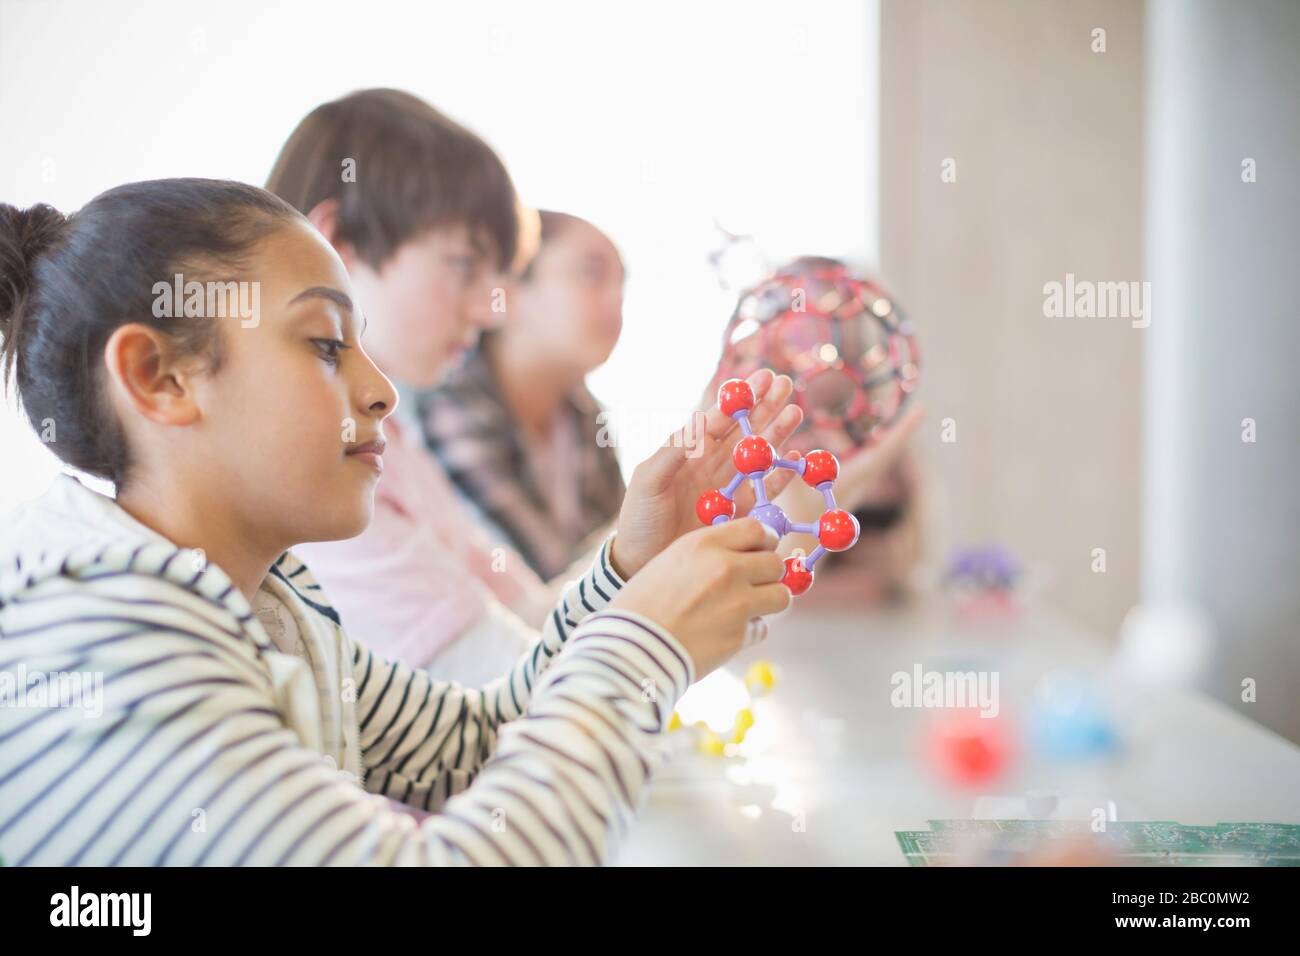 Curious girl examining molecule model in classroom Stock Photo